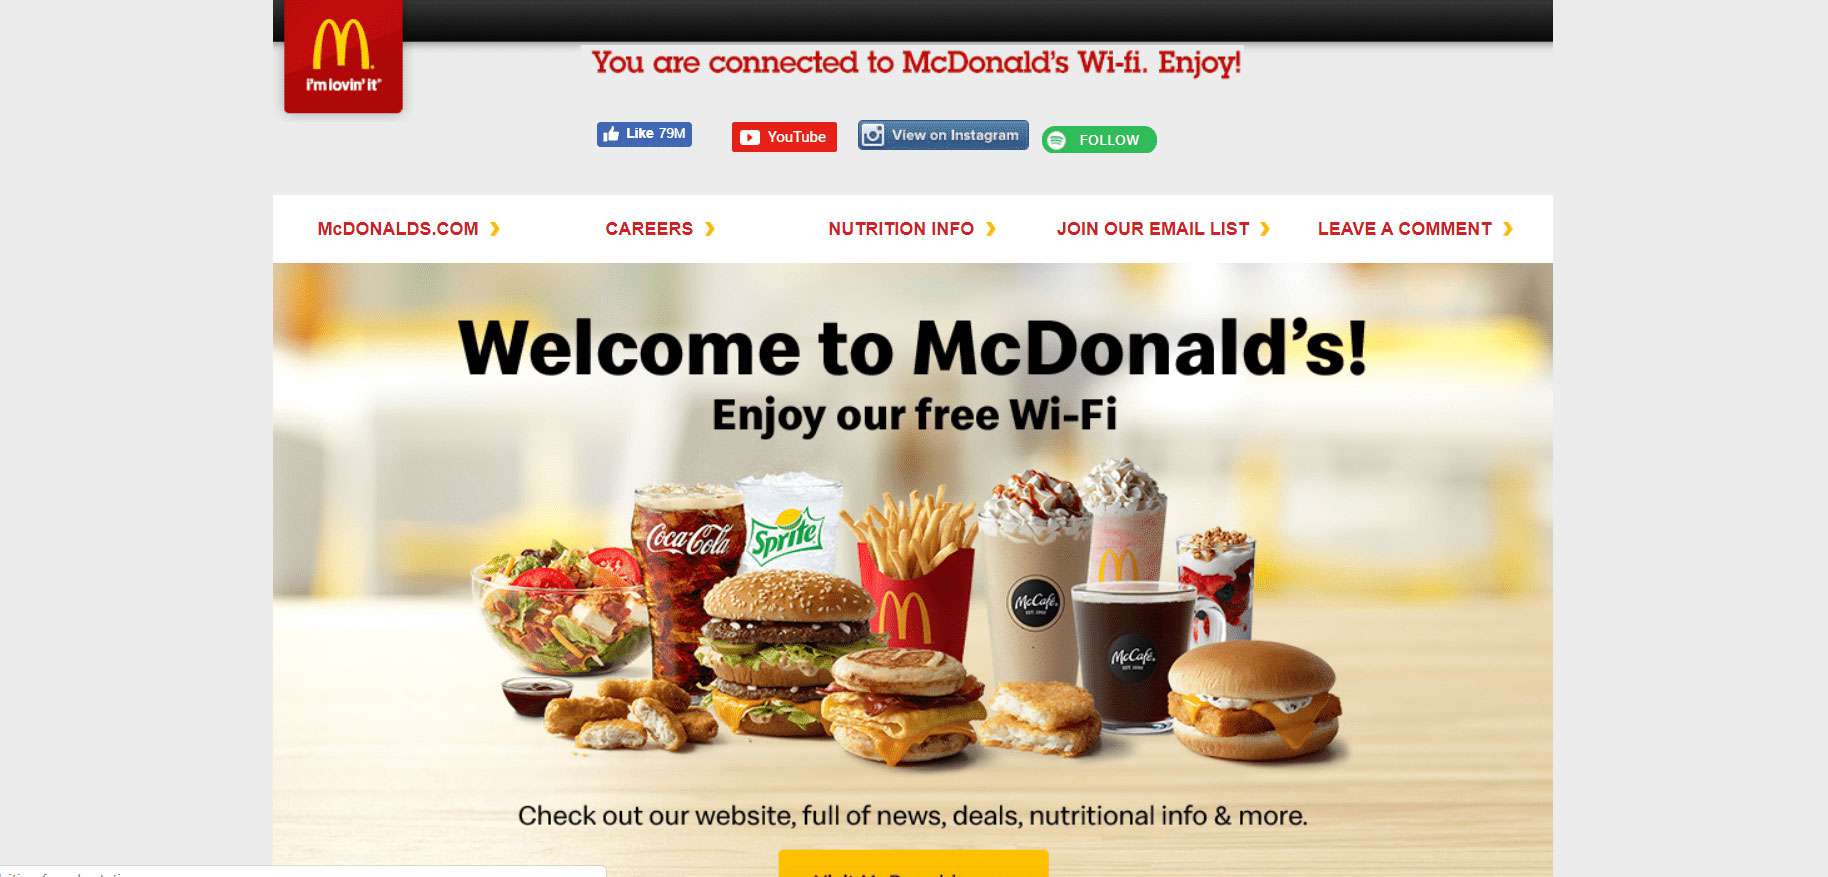 McDonalds Wi-Fi-välkomstsida